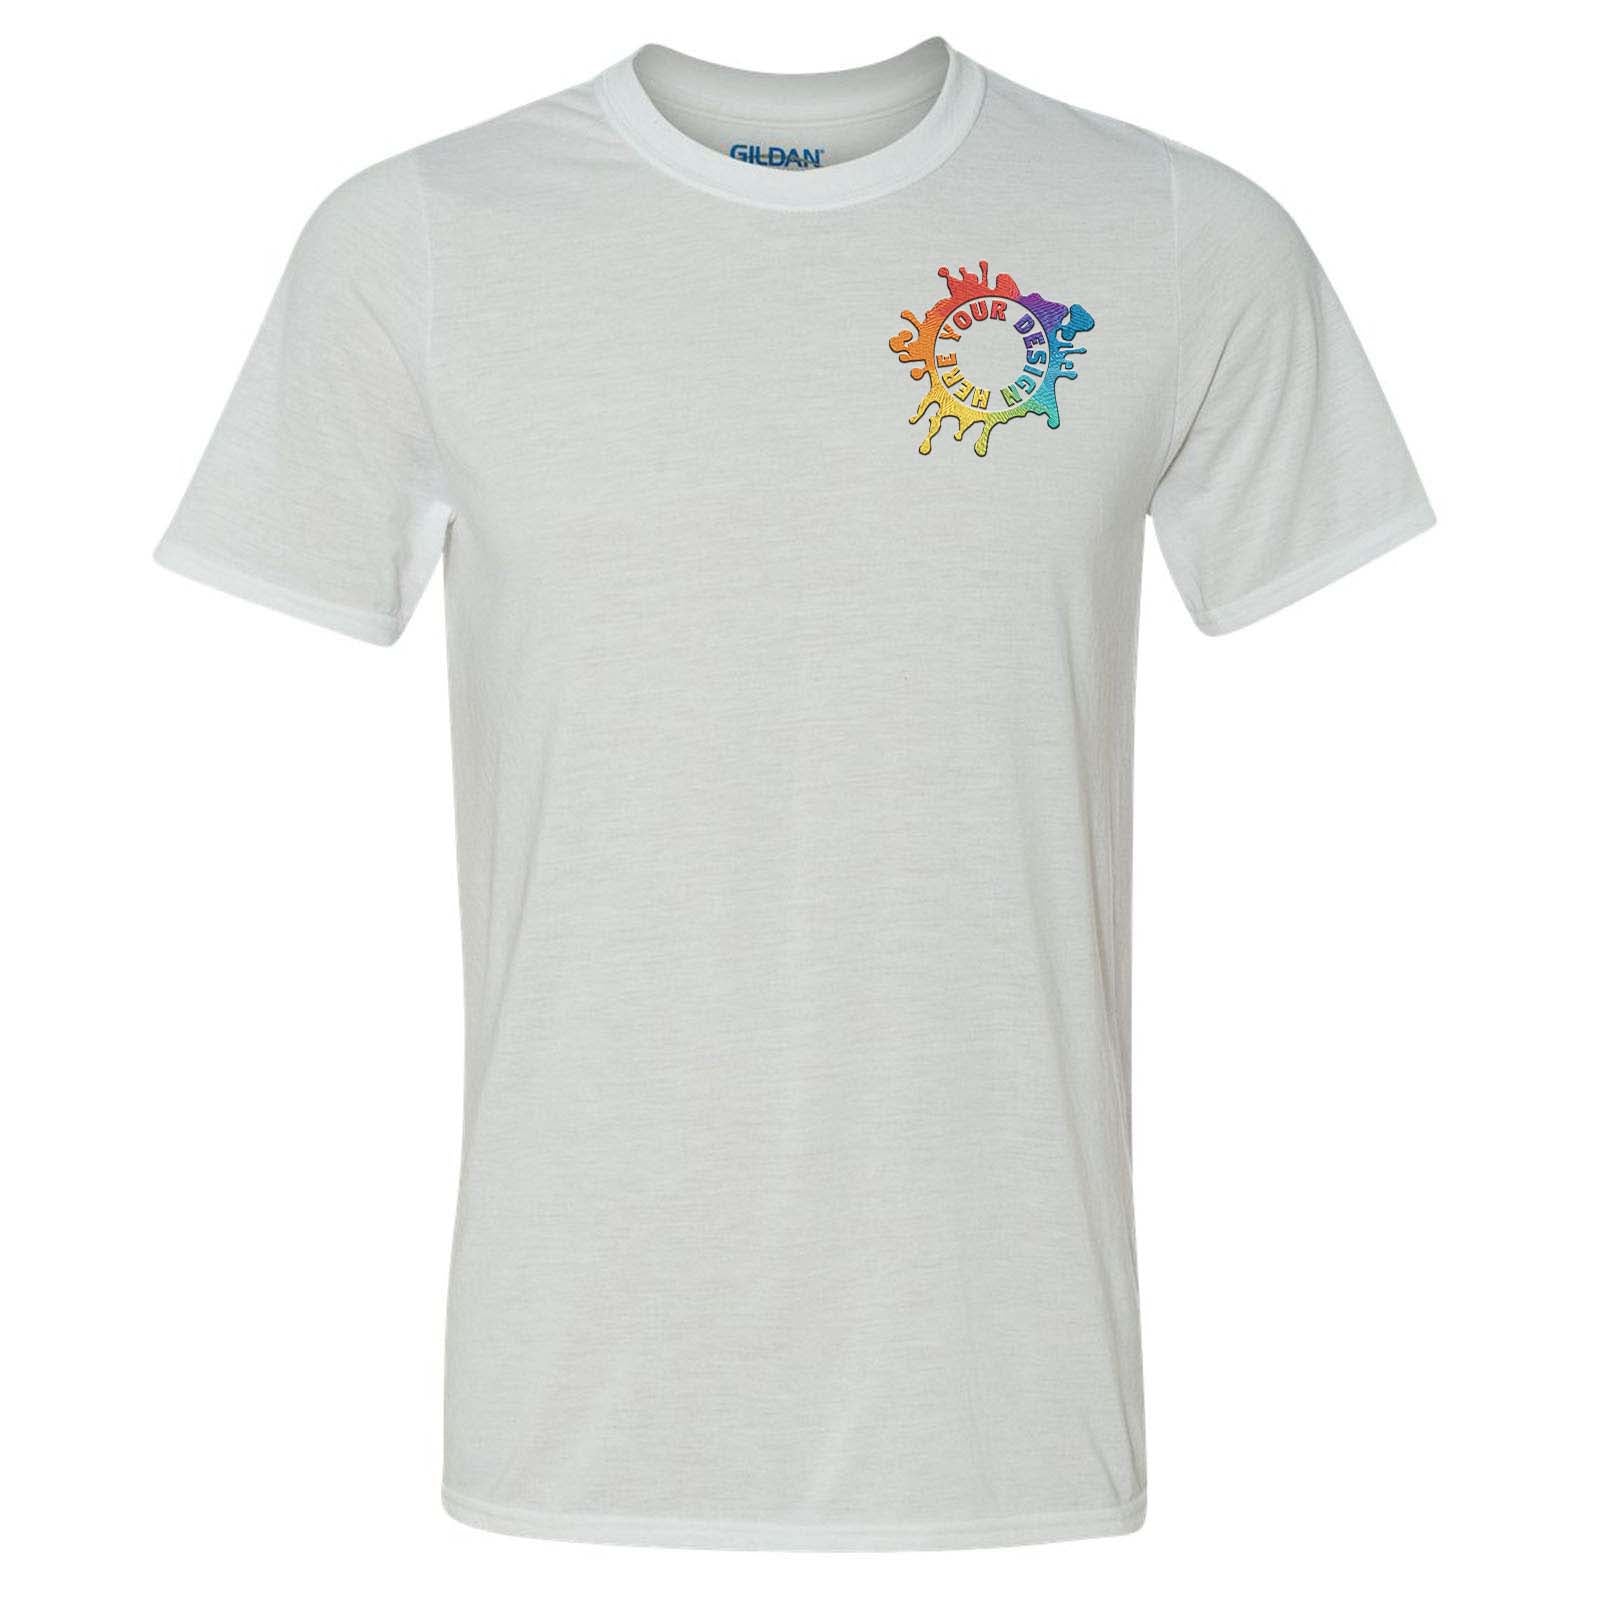 Gildan Men's Performance Polyester T-Shirt Embroidery - Mato & Hash